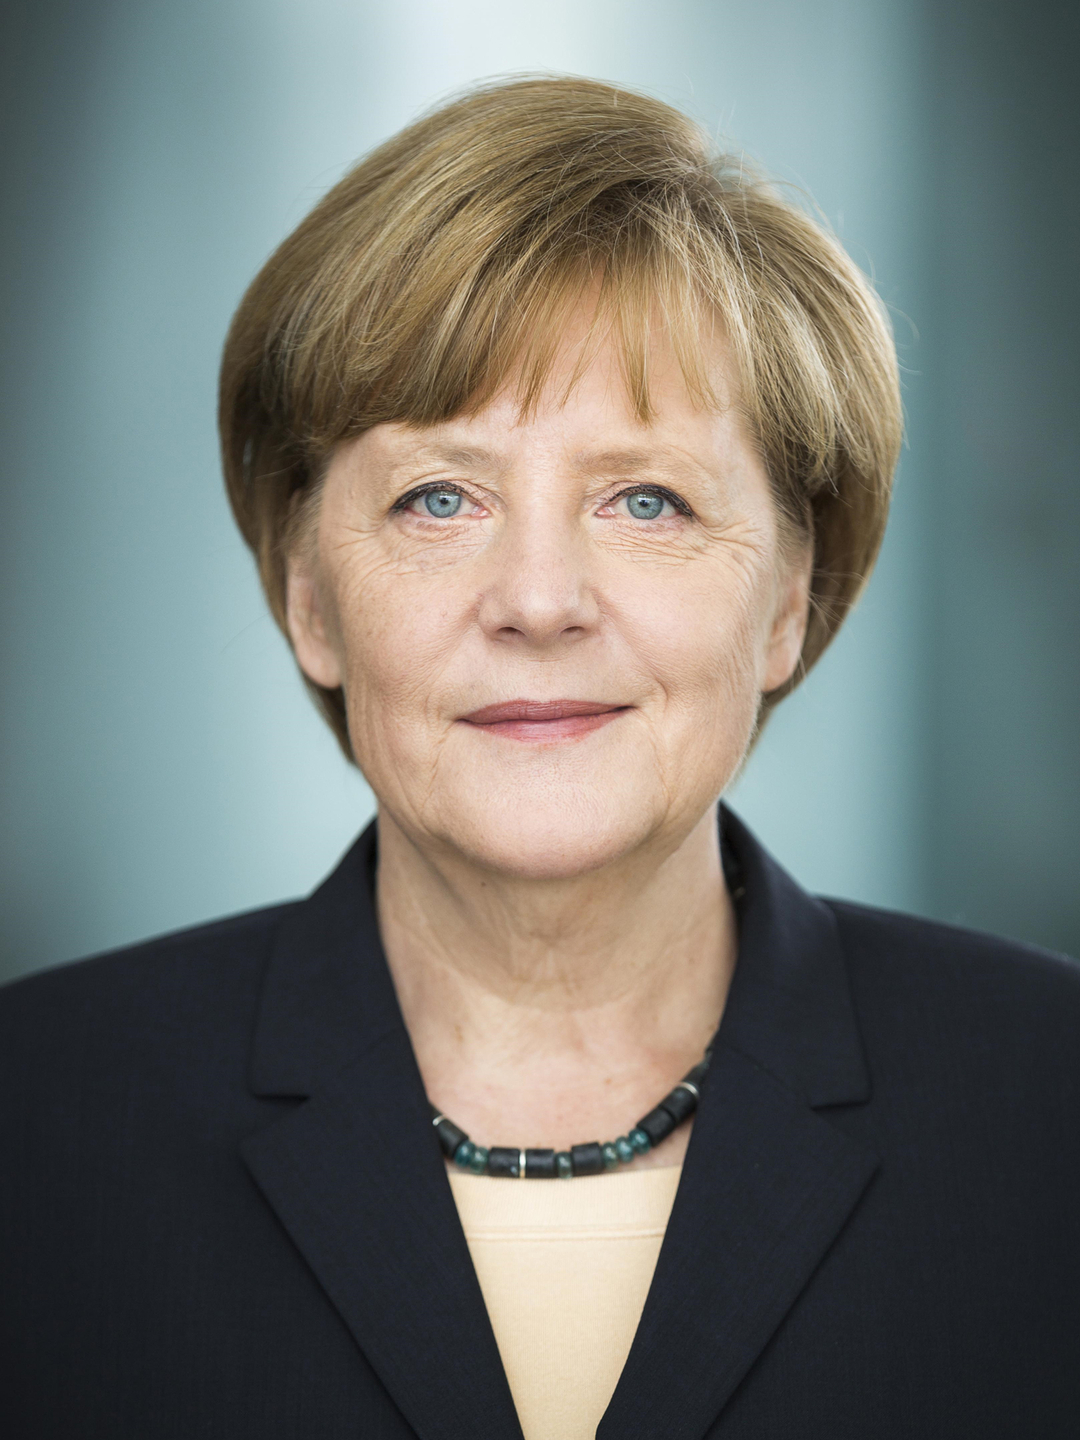 Angela Merkel relationship